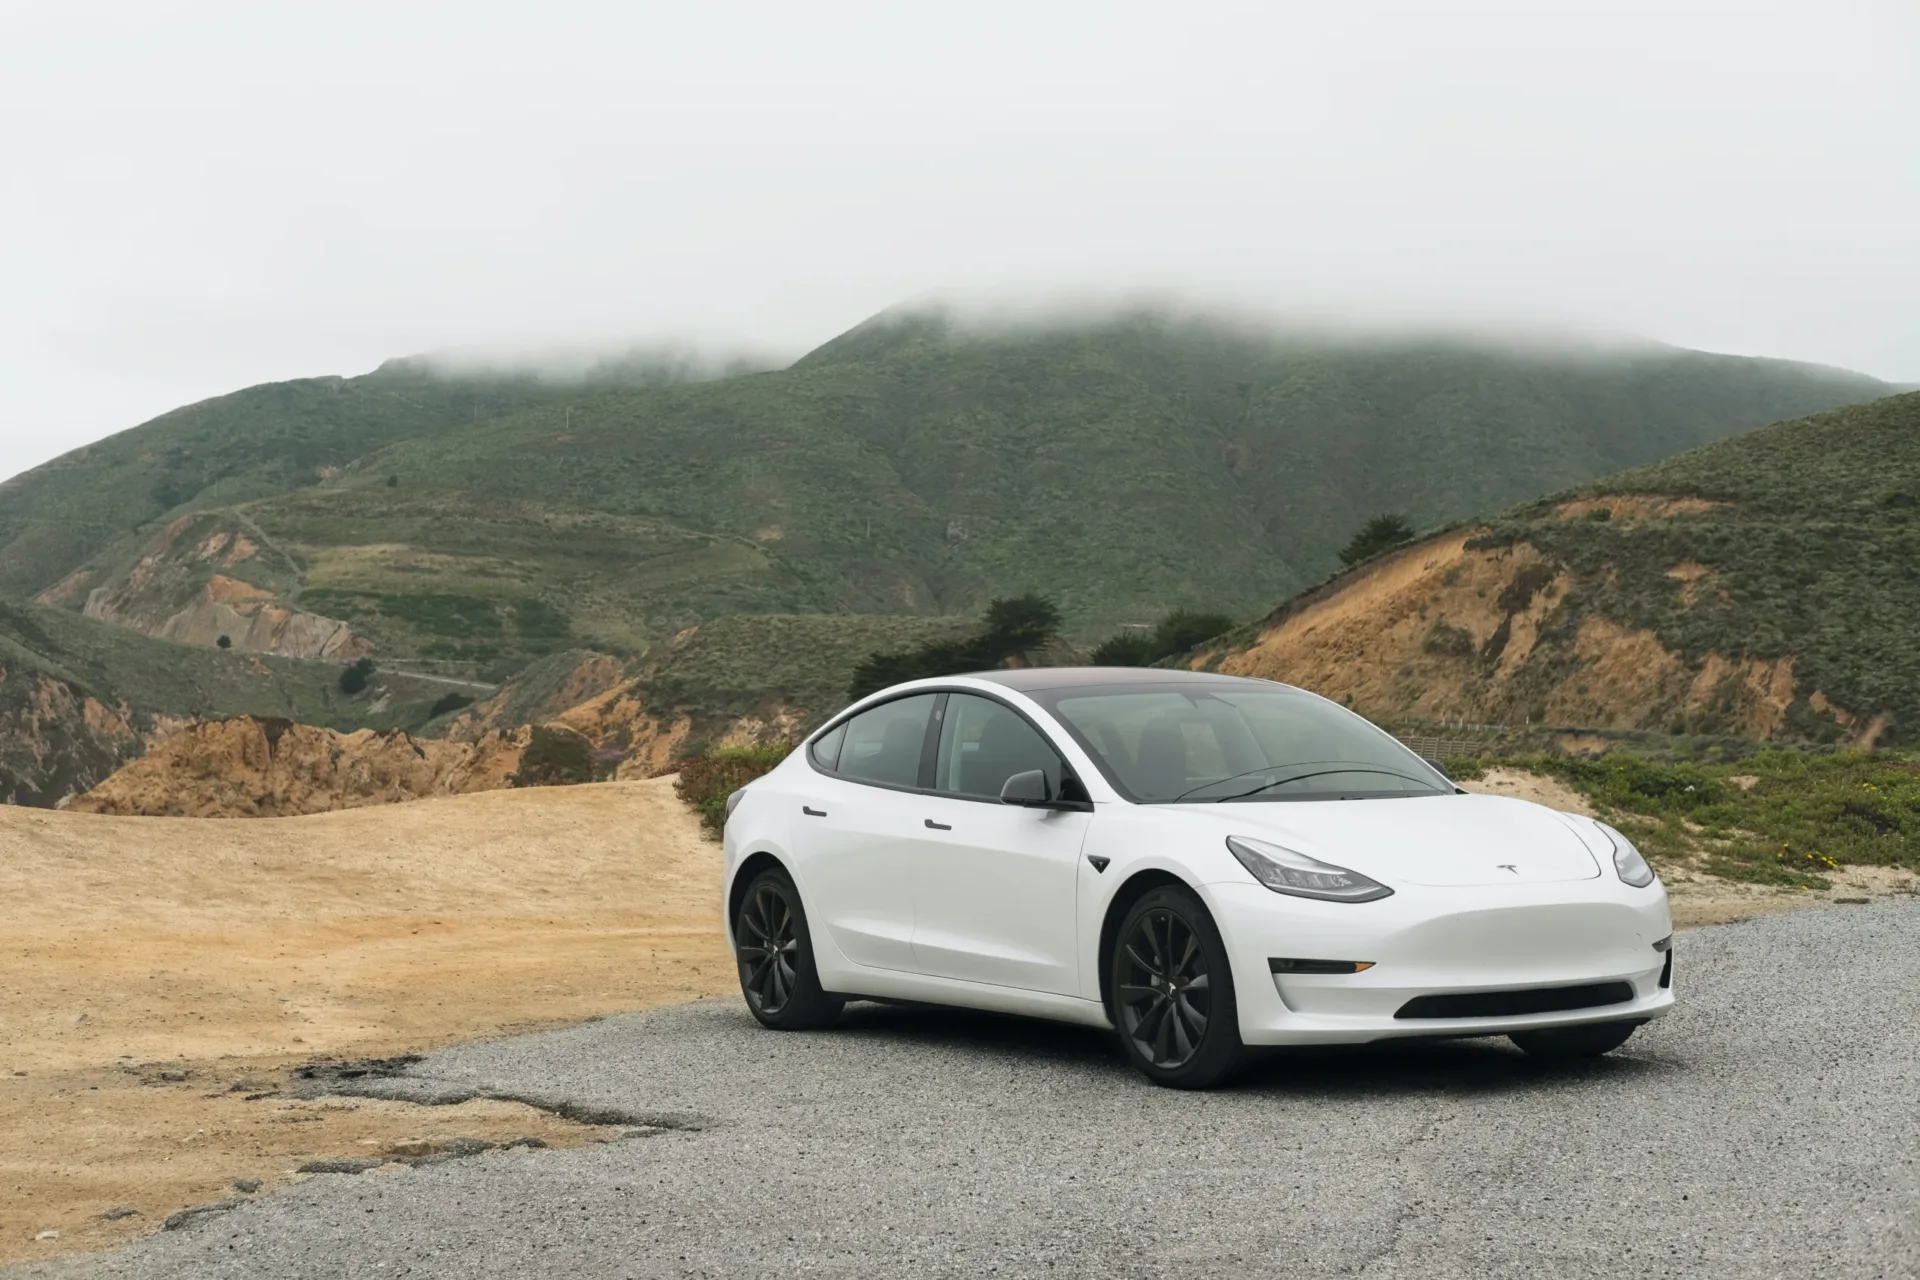 Unconventional Strategies: How Tesla Broke the Mold